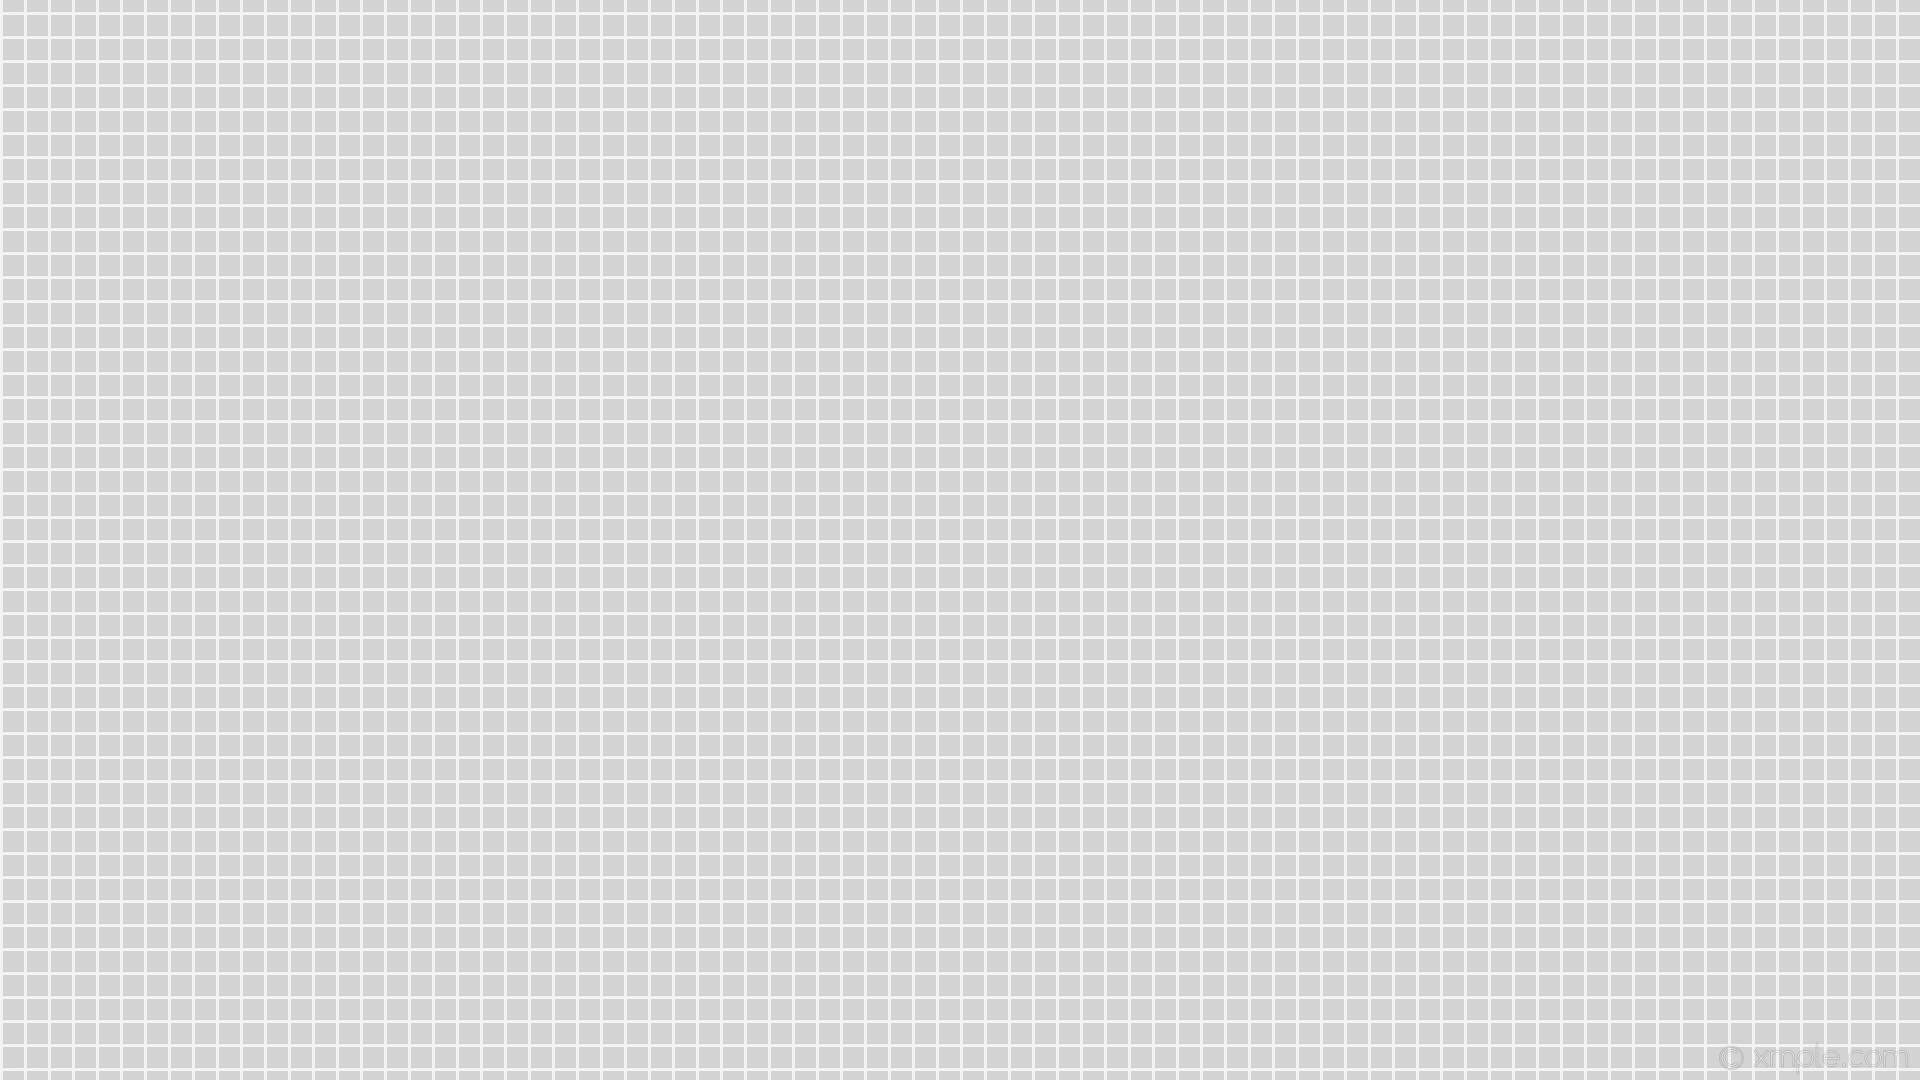 1920x1080 wallpaper graph paper white grid grey light gray #d3d3d3 #ffffff 0Â° 3px 24px